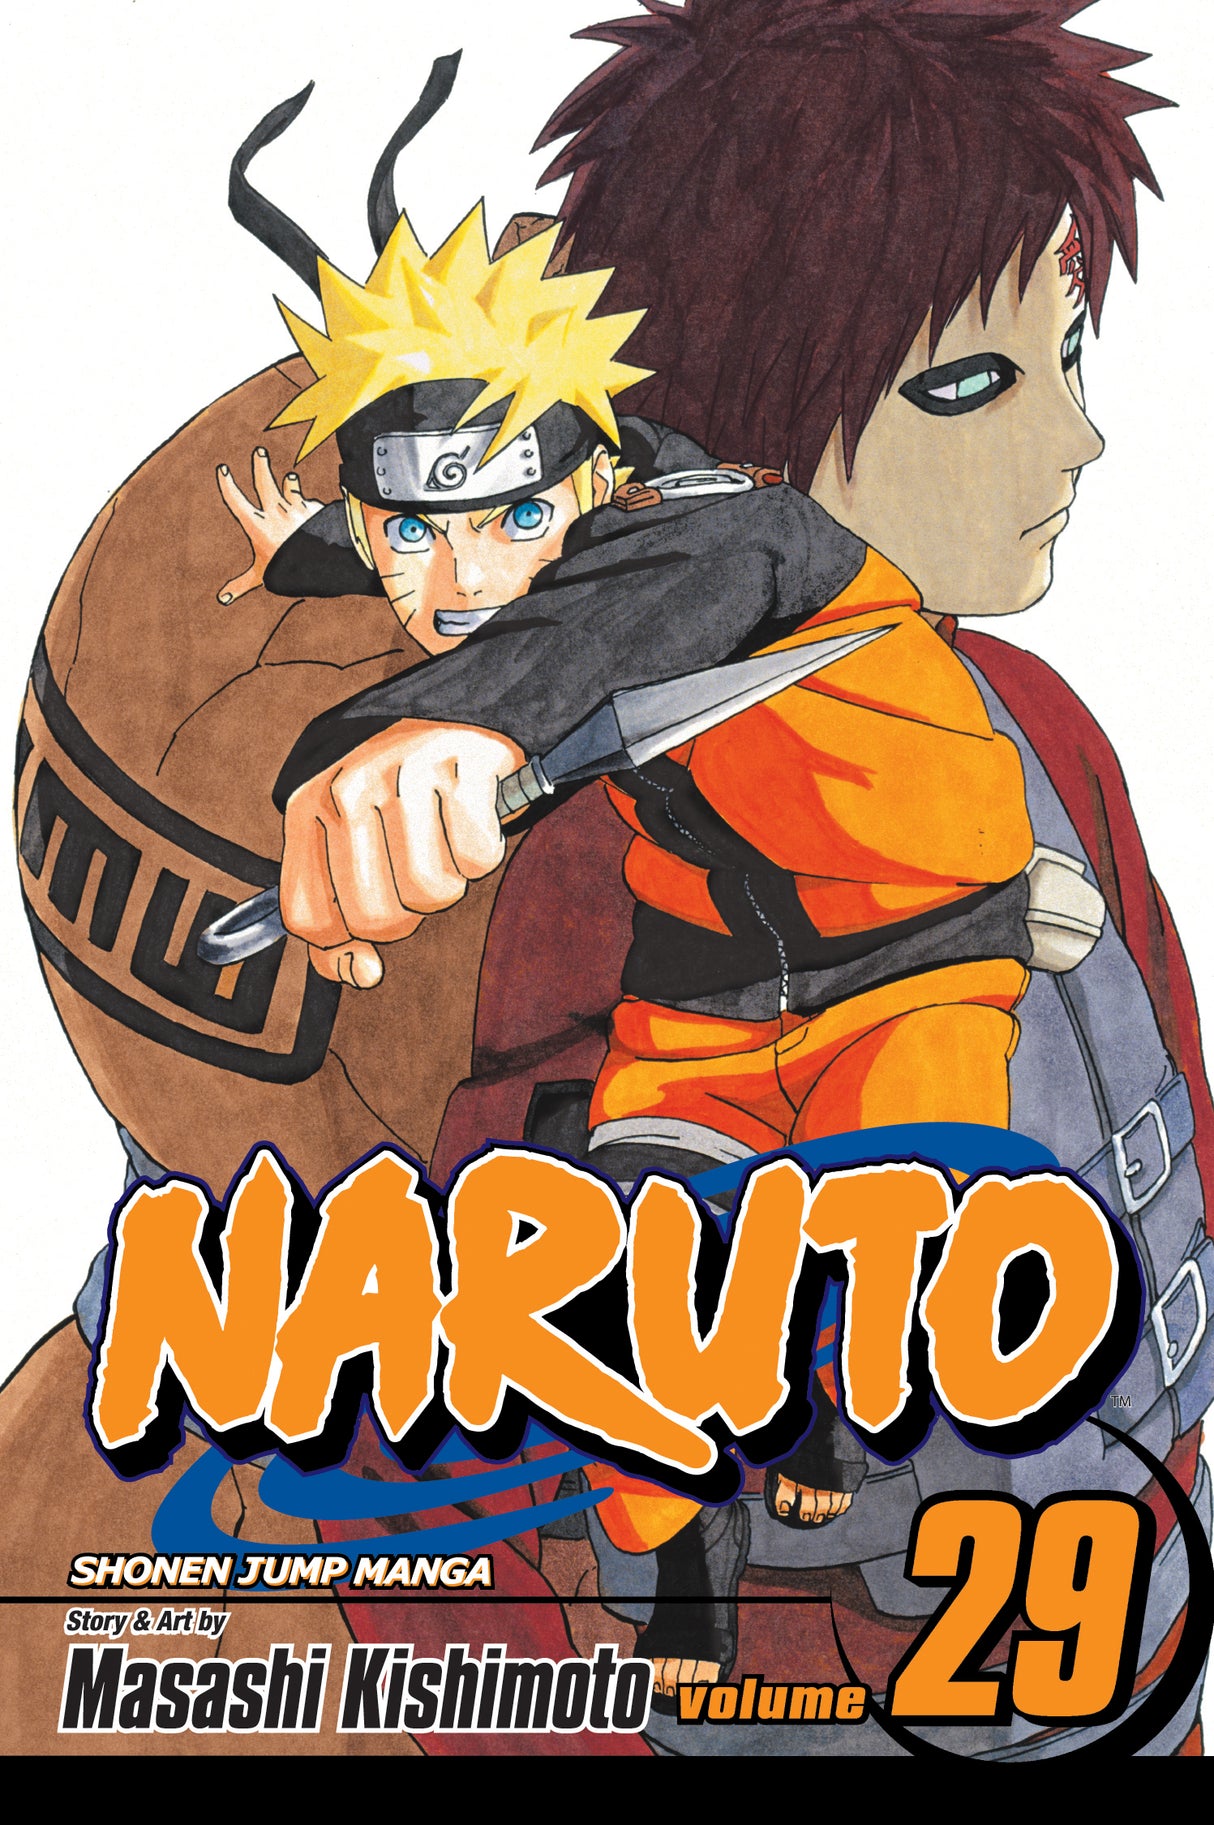 Cover image of the Manga Naruto, Vol.29: Kakashi vs. Itachi!!